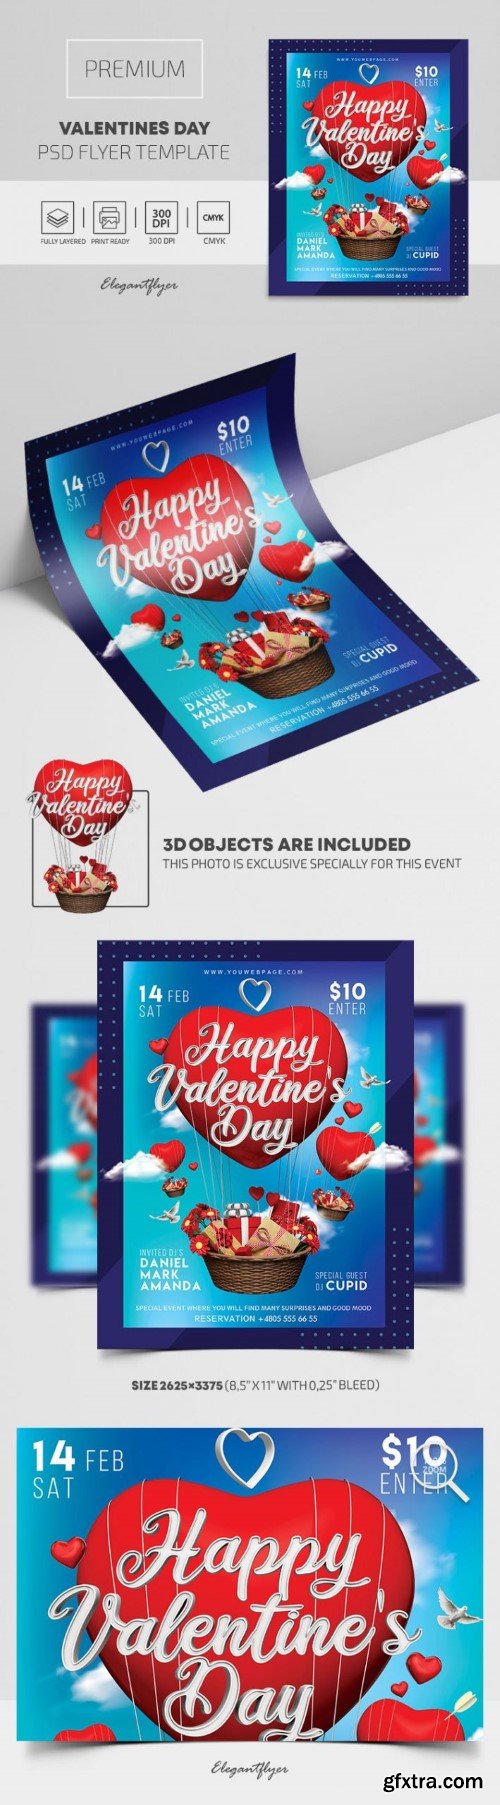 Valentines Day – Premium PSD Flyer Template